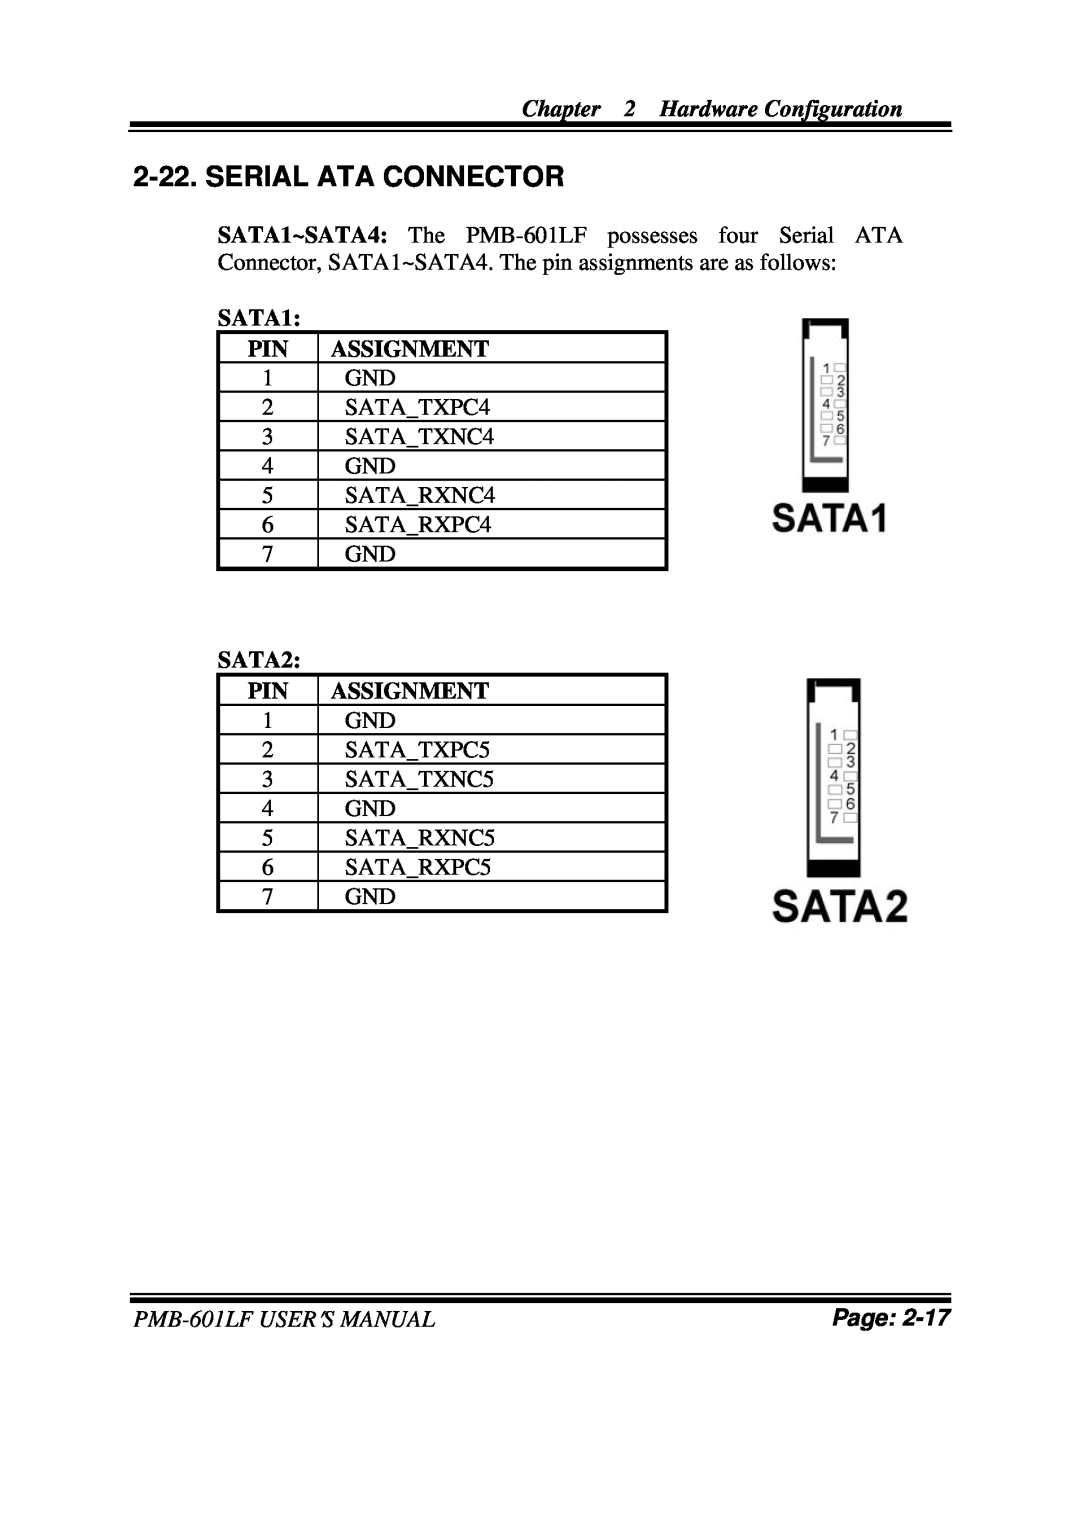 Intel user manual Serial Ata Connector, SATA1, SATA2, Hardware Configuration, Assignment, PMB-601LFUSER′S MANUAL, Page 